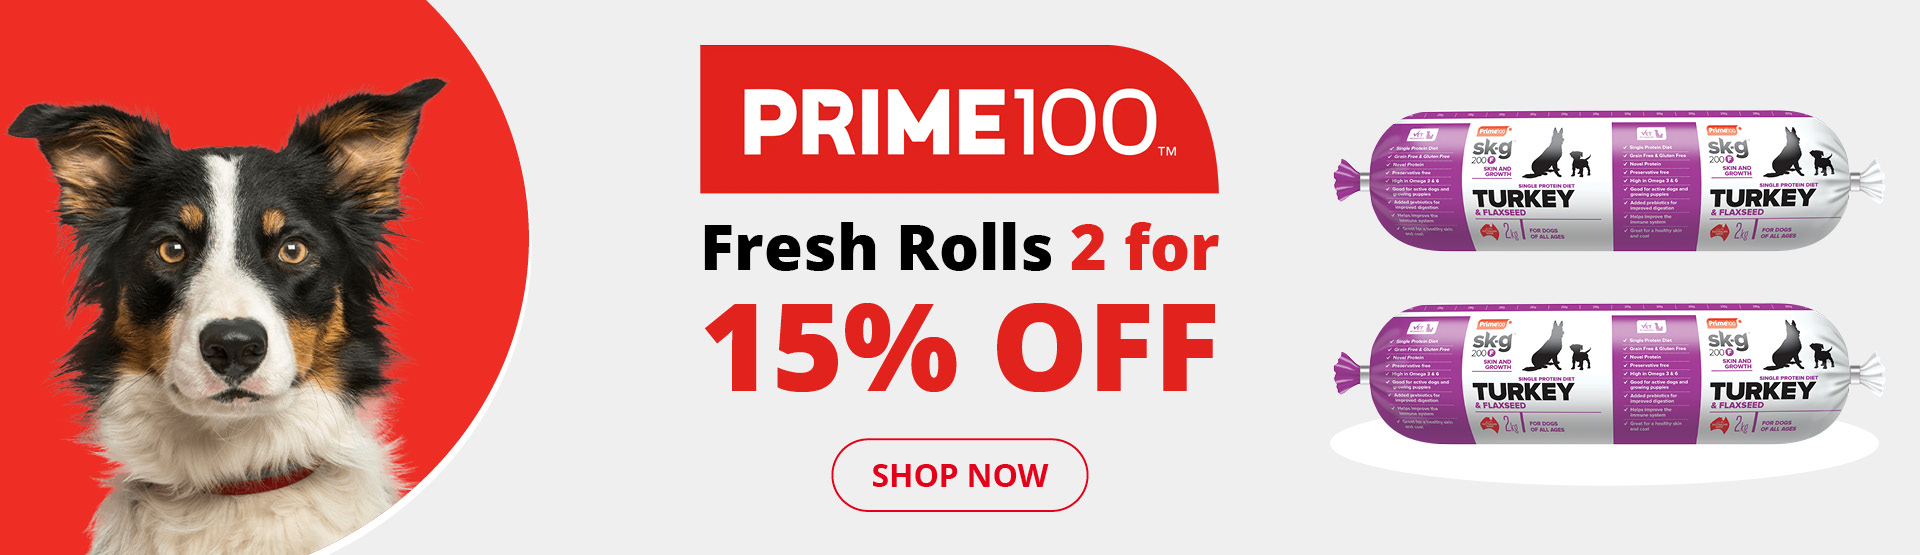 Prime 100 Fresh Rolls 2 for 15% Off 